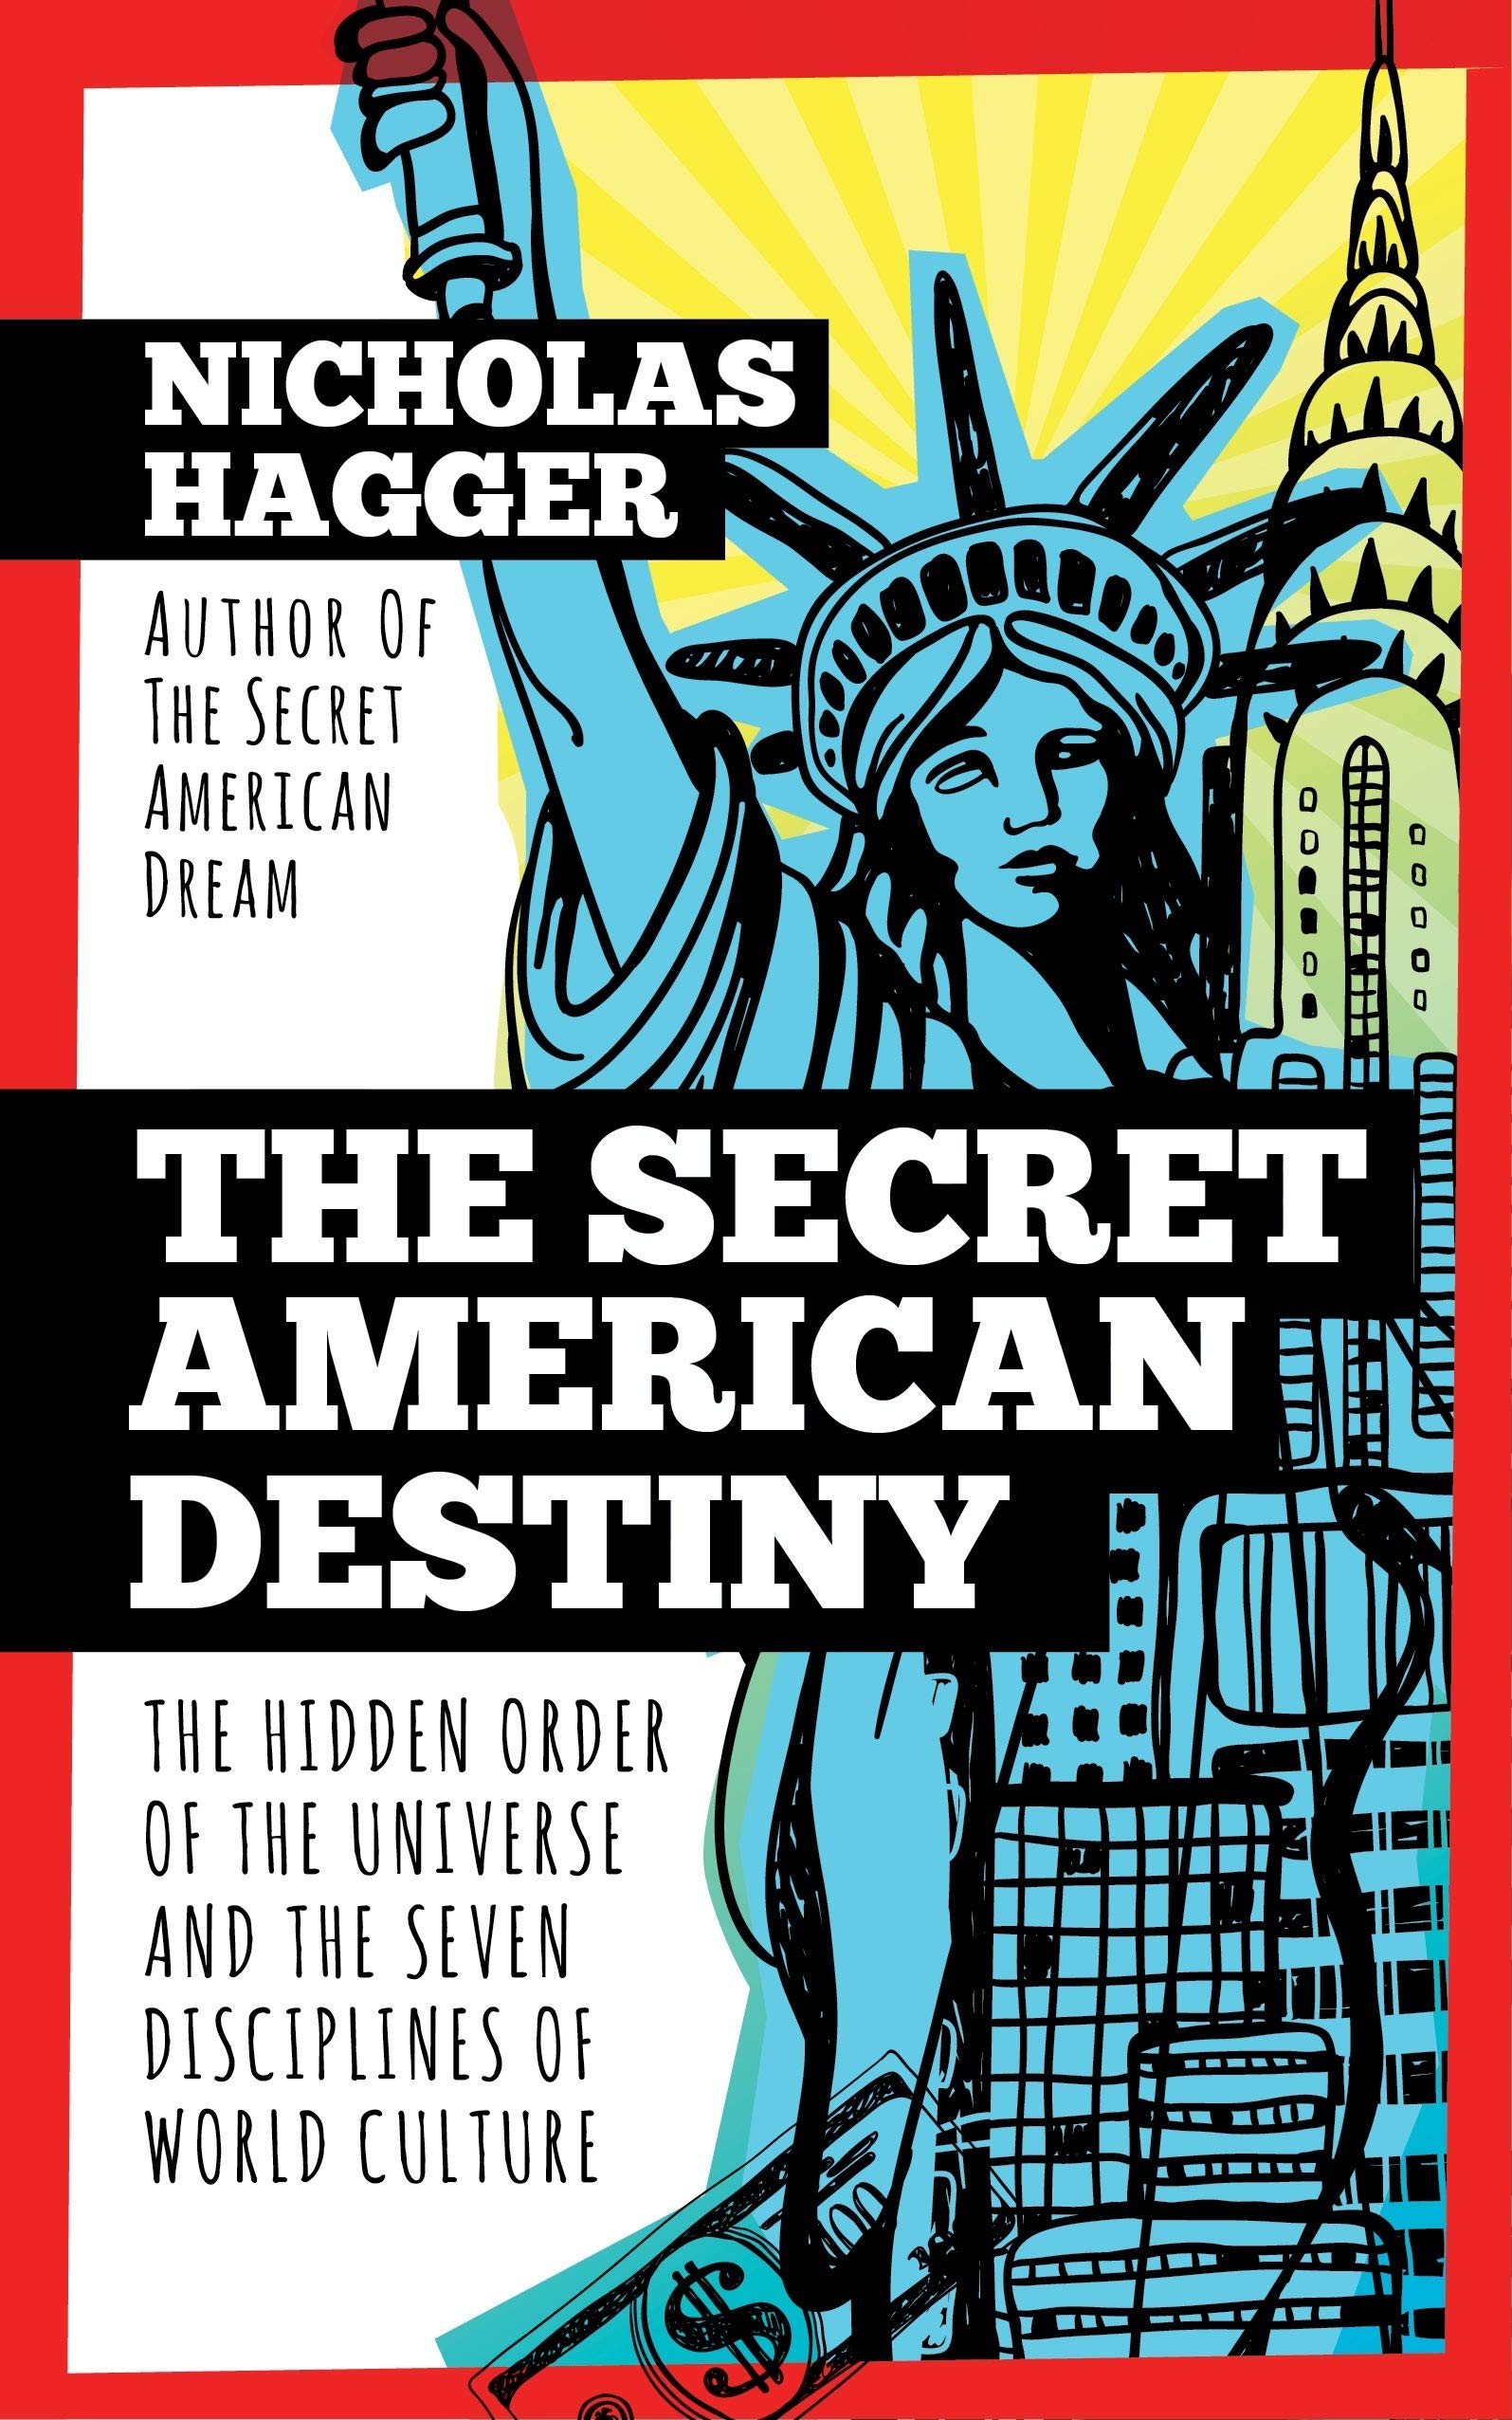 The Secret American Destiny - Nicholas Hagger